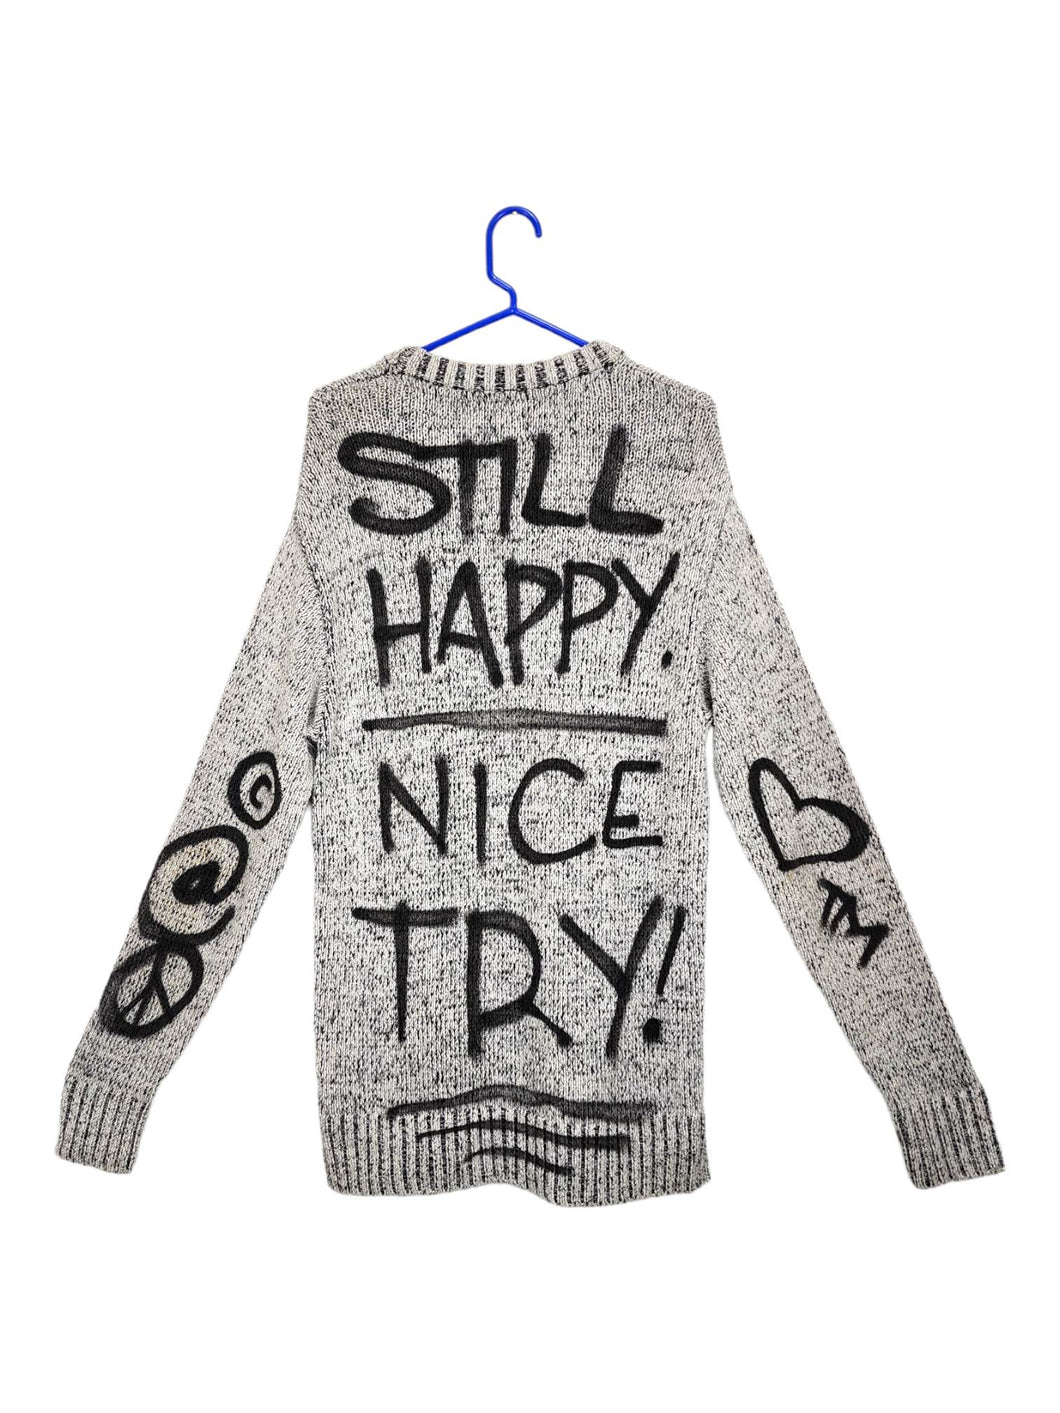 STILL HAPPY NICE TRY Grey Sweater